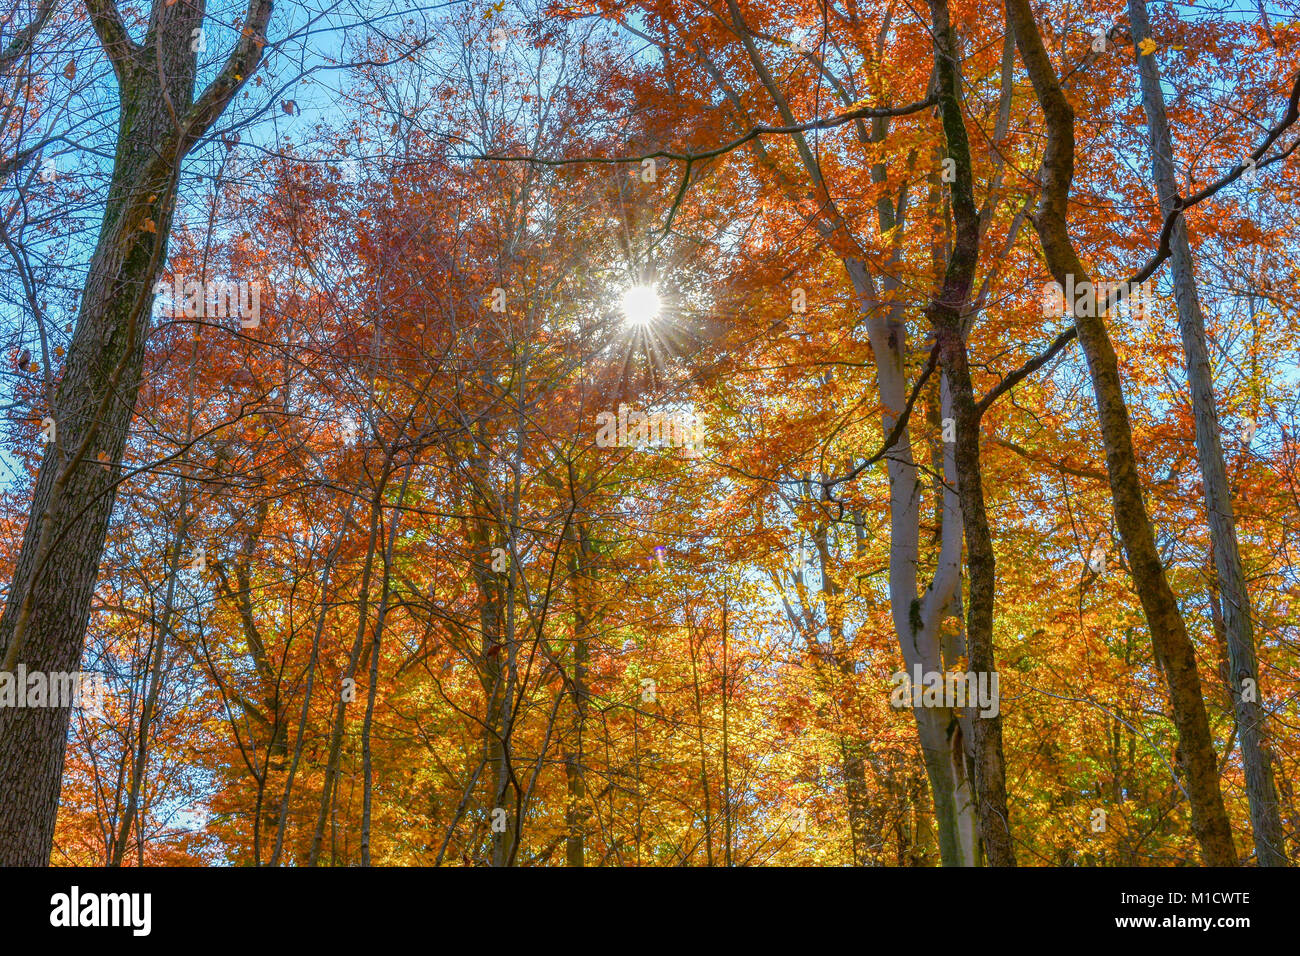 The sun shining through the fall foliage illuminating the leaves and trees surrounding. Stock Photo